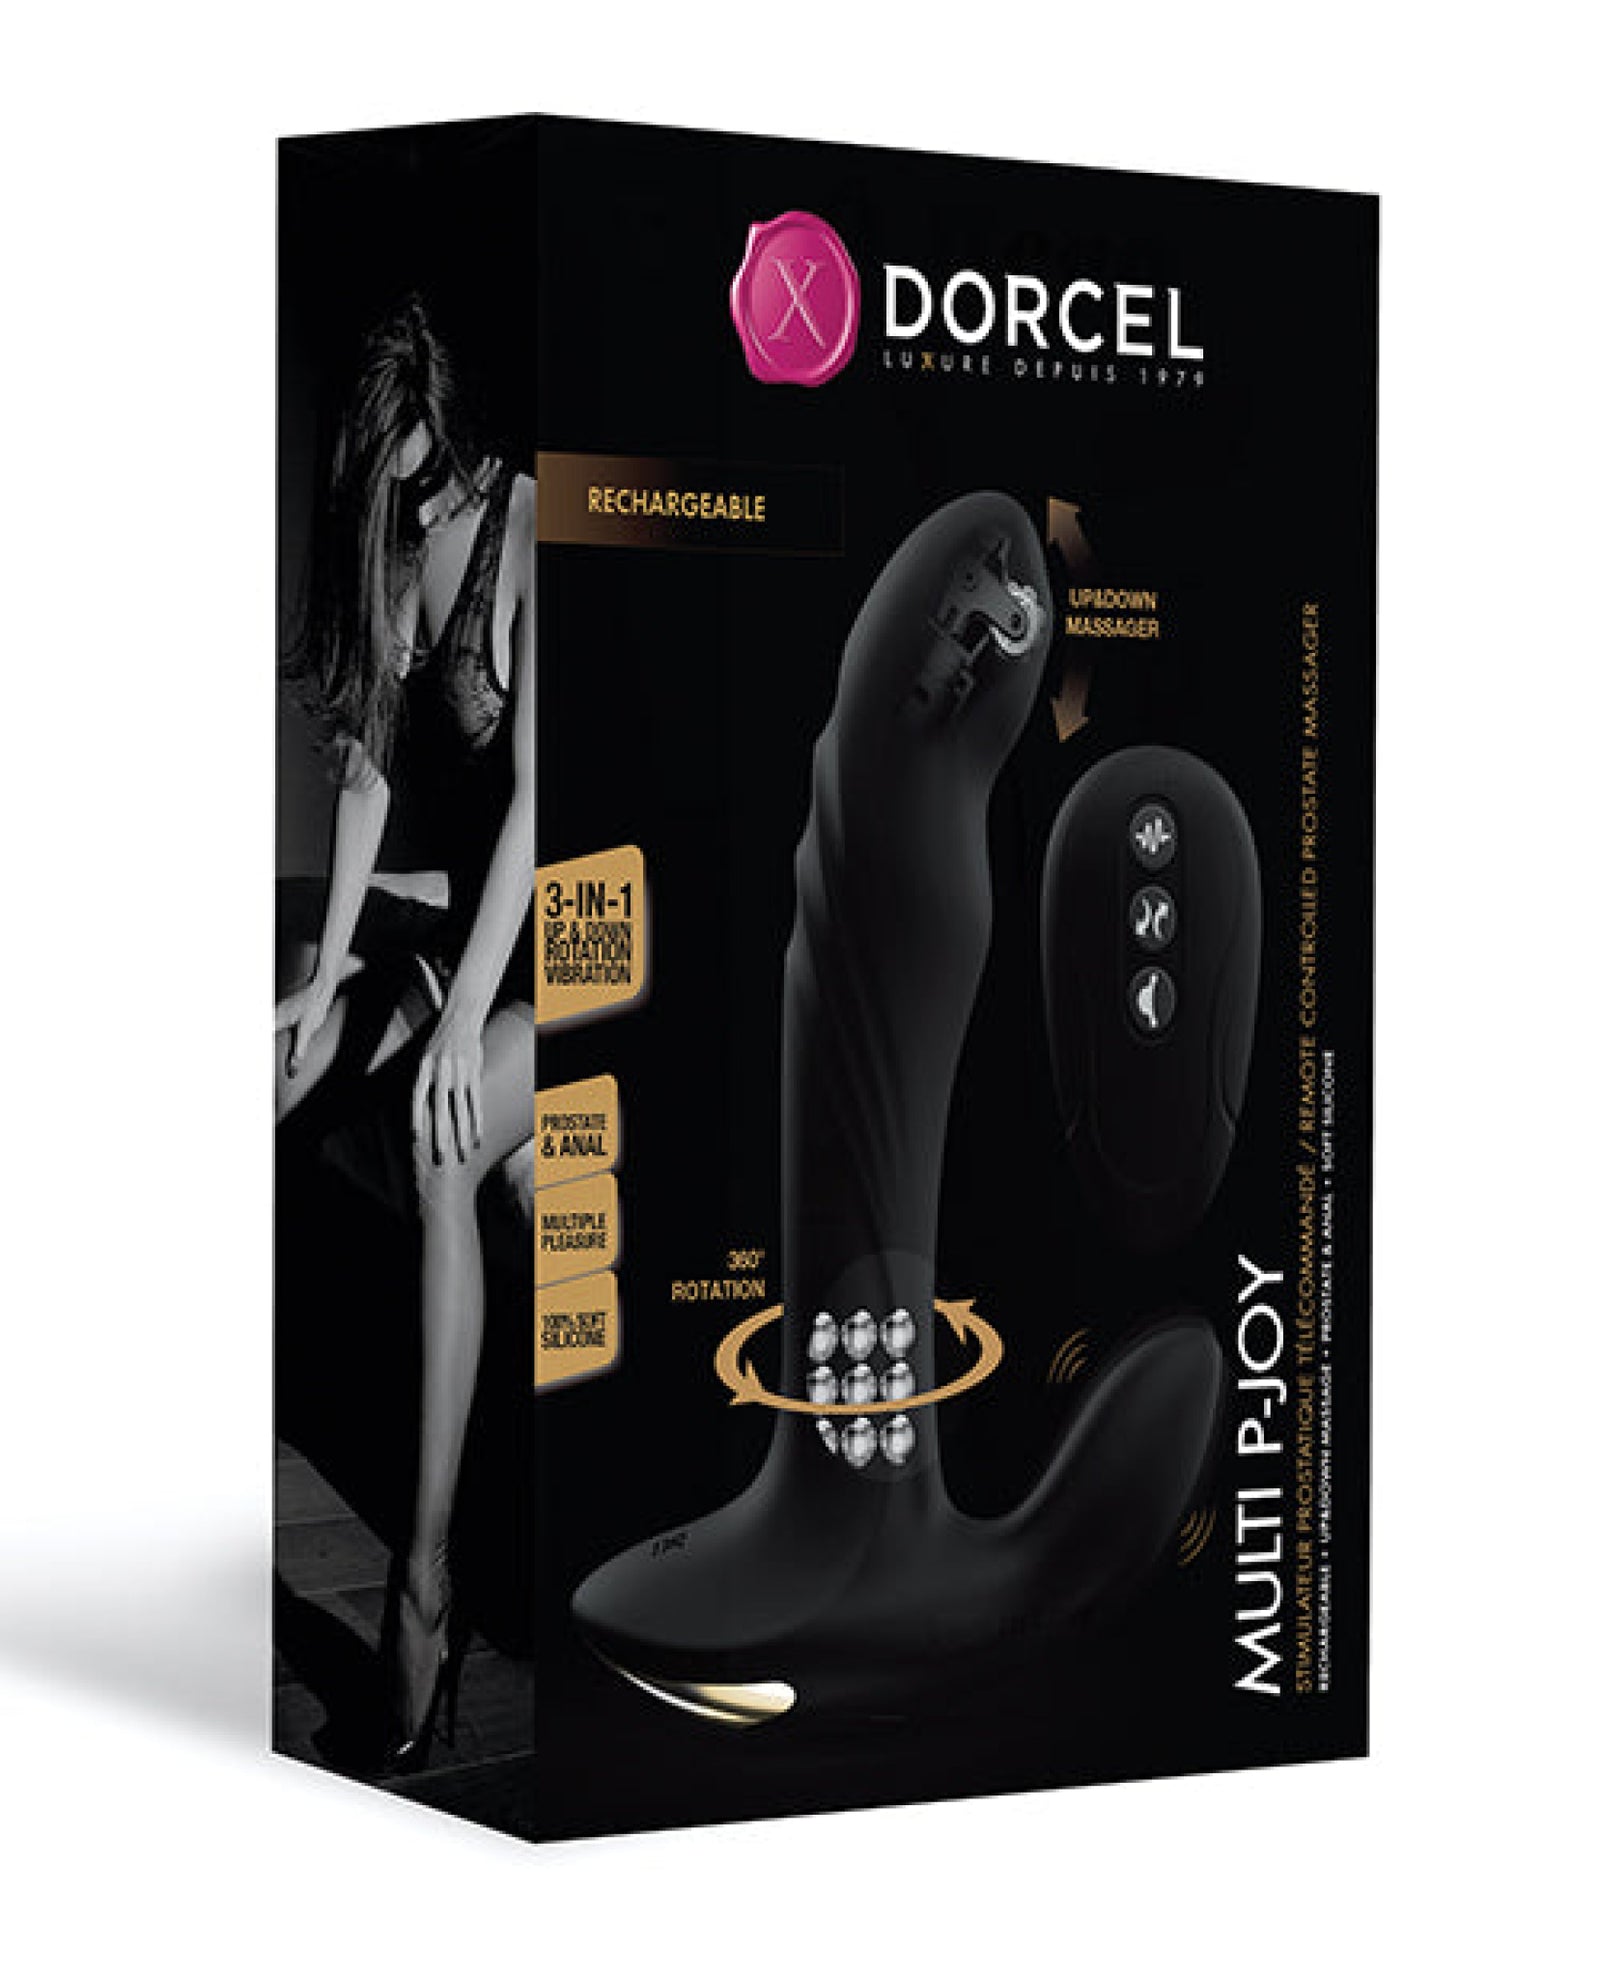 Dorcel P-joy Double Action Prostate Massager - Black Dorcel